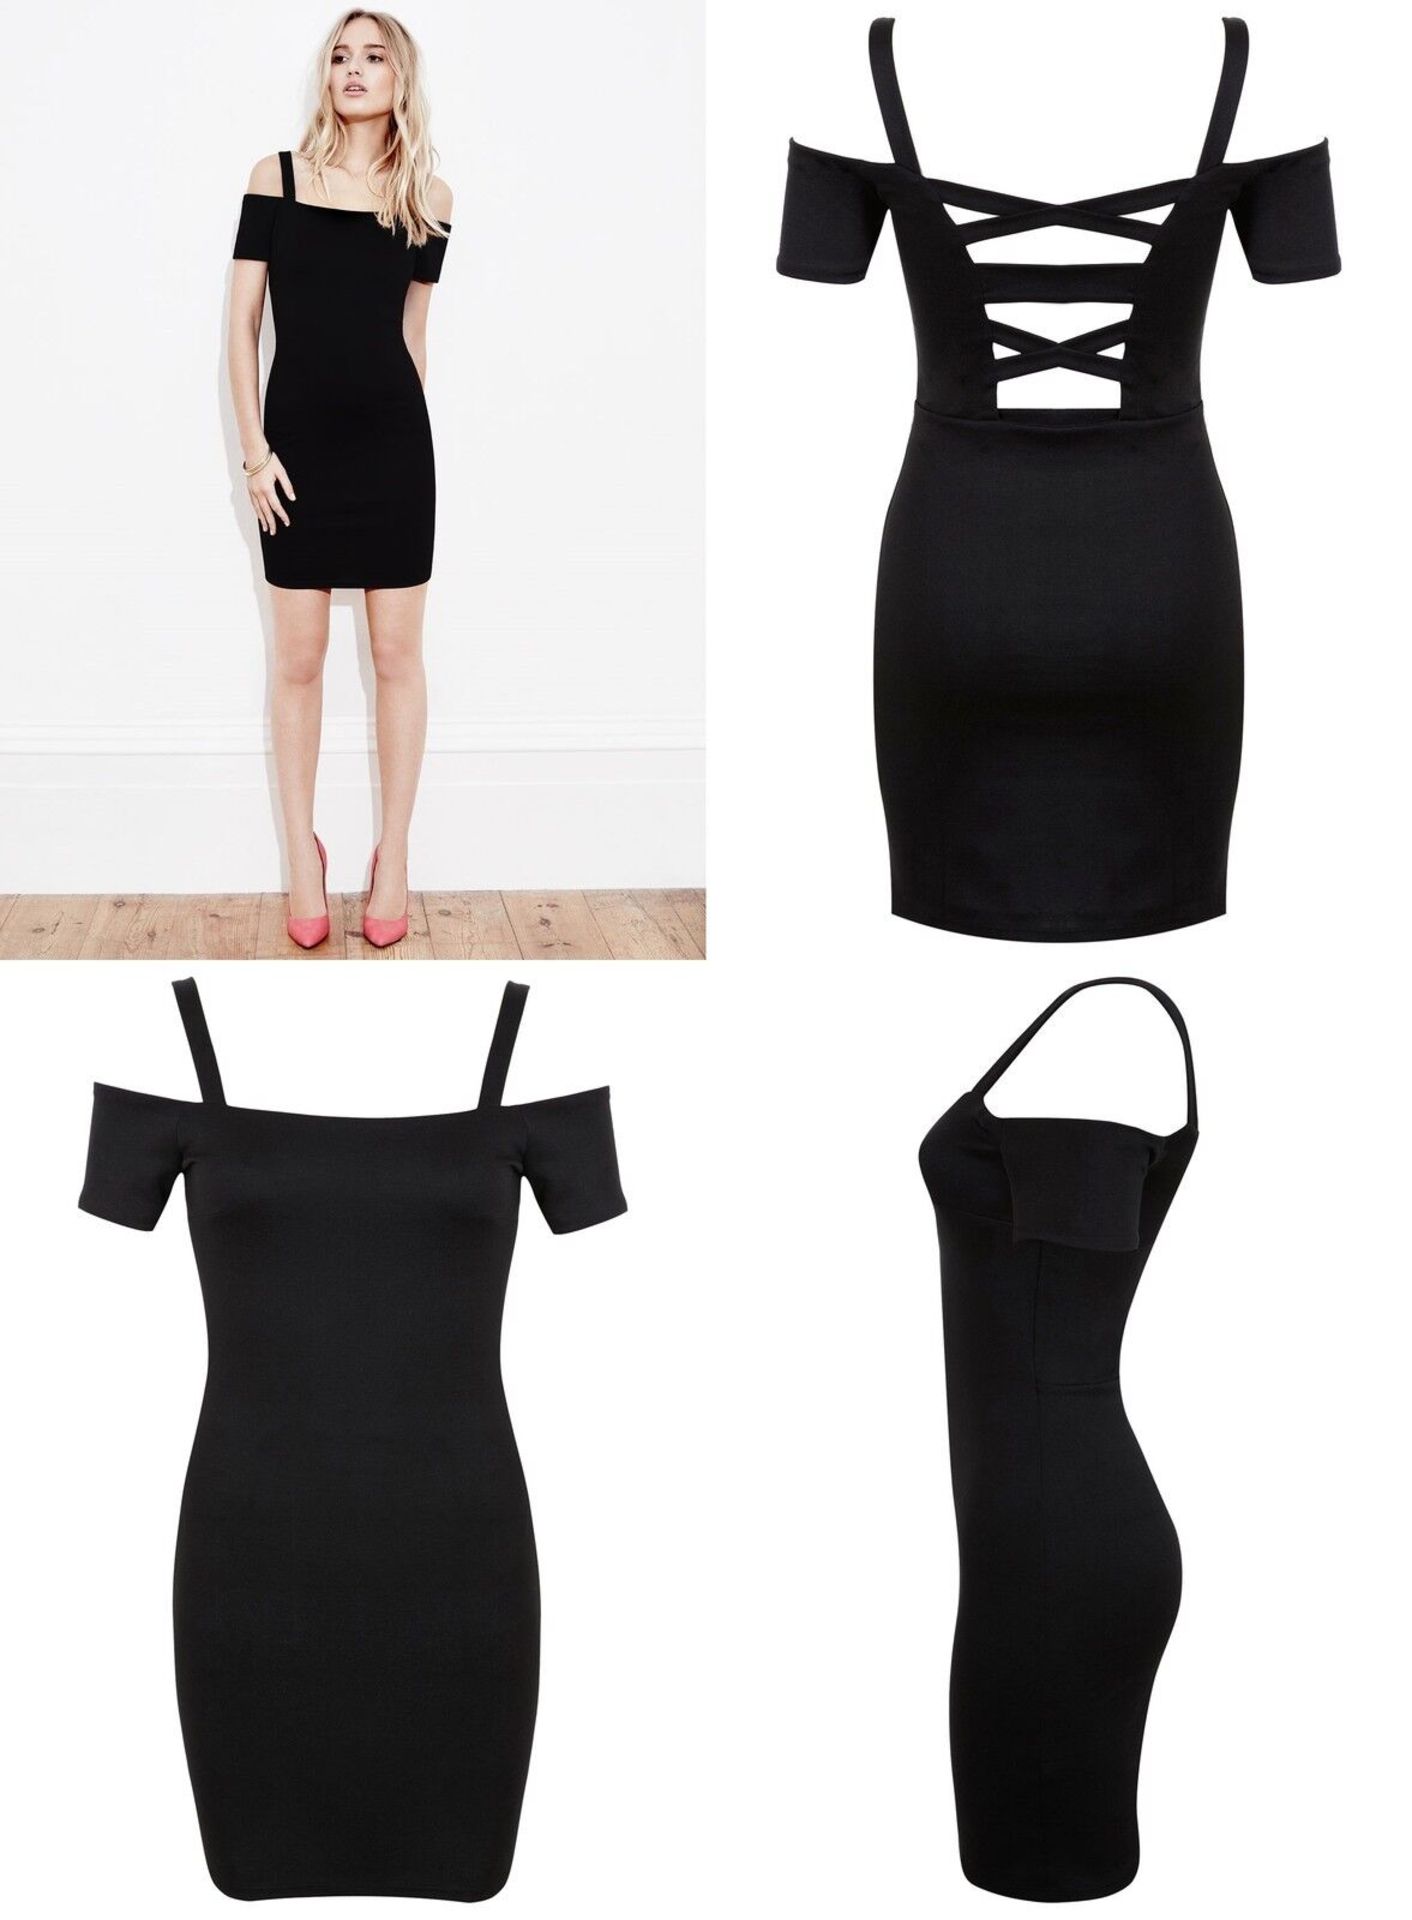 Liquidation Stock Women's Miss Selfridge Black Bodycon Strap Bardot Dress x 60 - Image 2 of 2